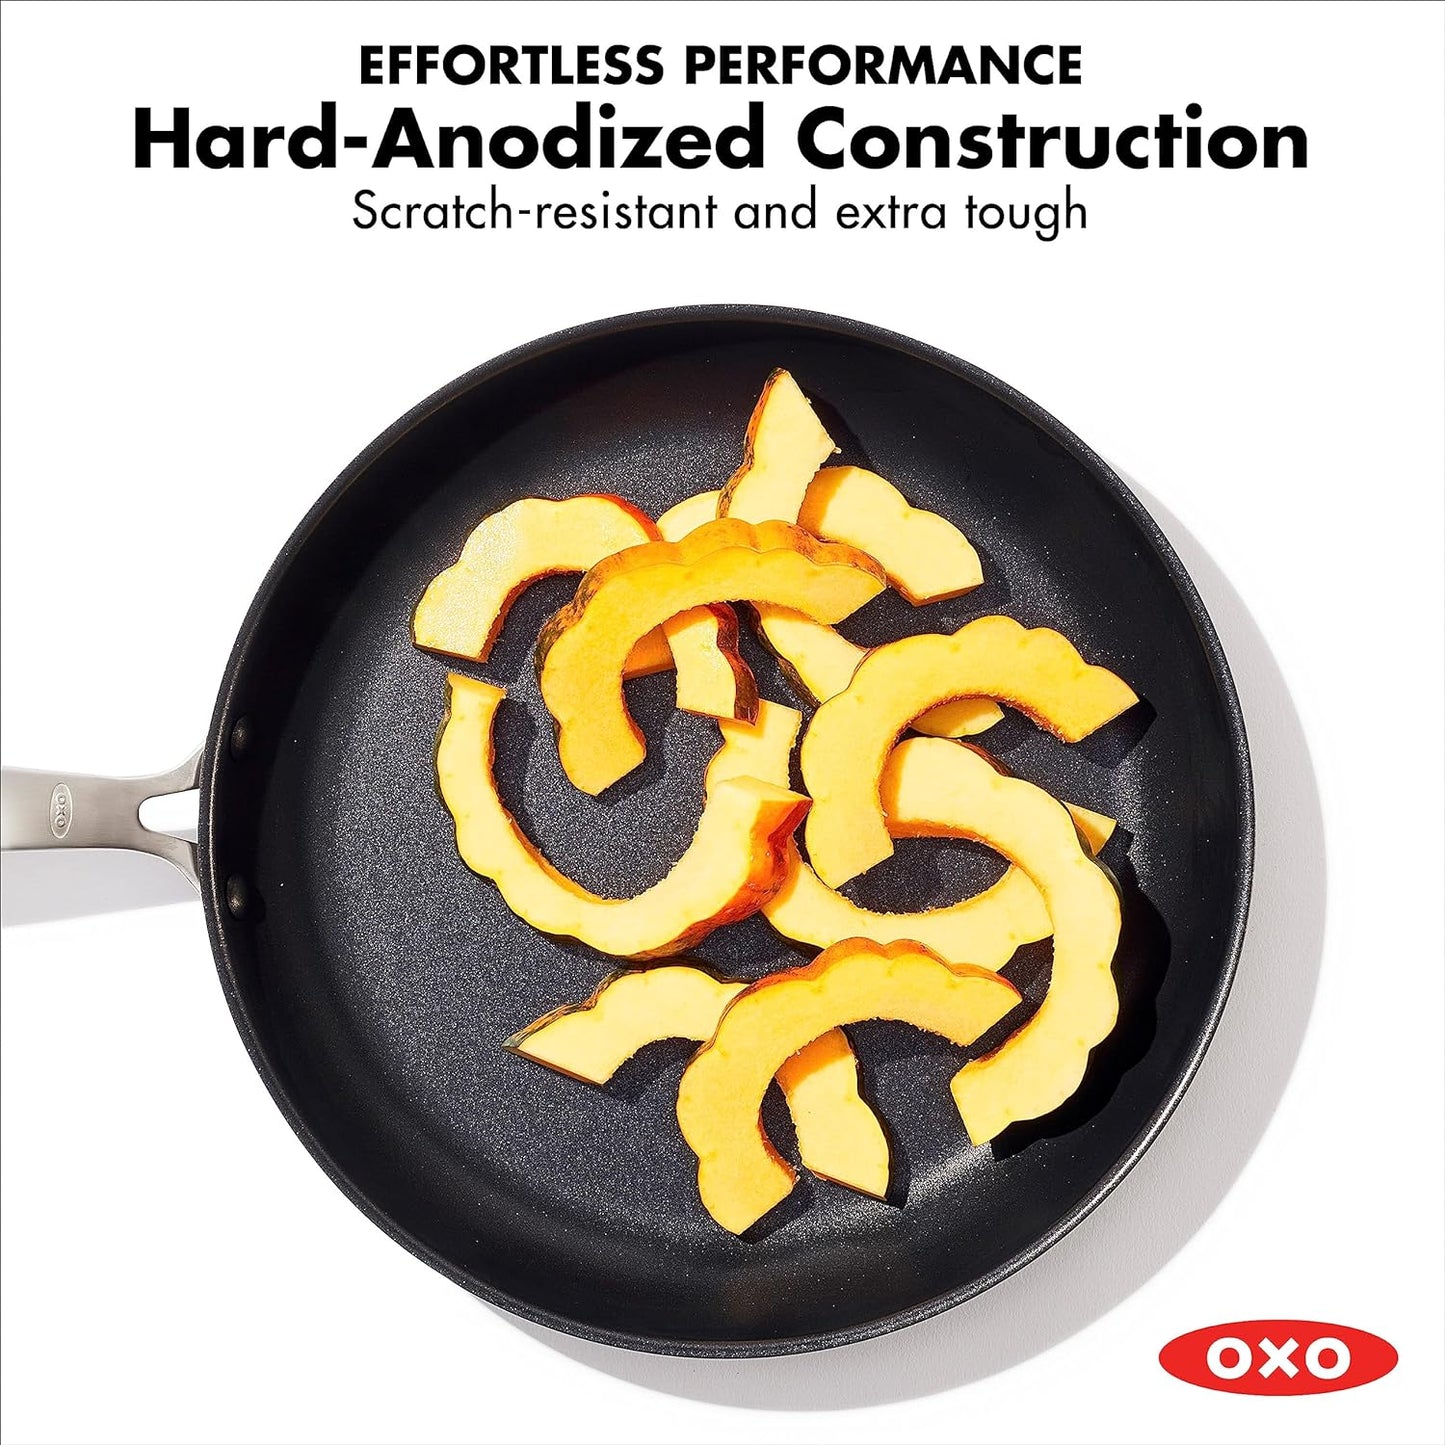 OXO Good Grips Pro 12" Frying Pan Skillet, 3-Layered German Engineered Nonstick Coating, Dishwasher Safe, Oven Safe, Stainless Steel Handle, Black